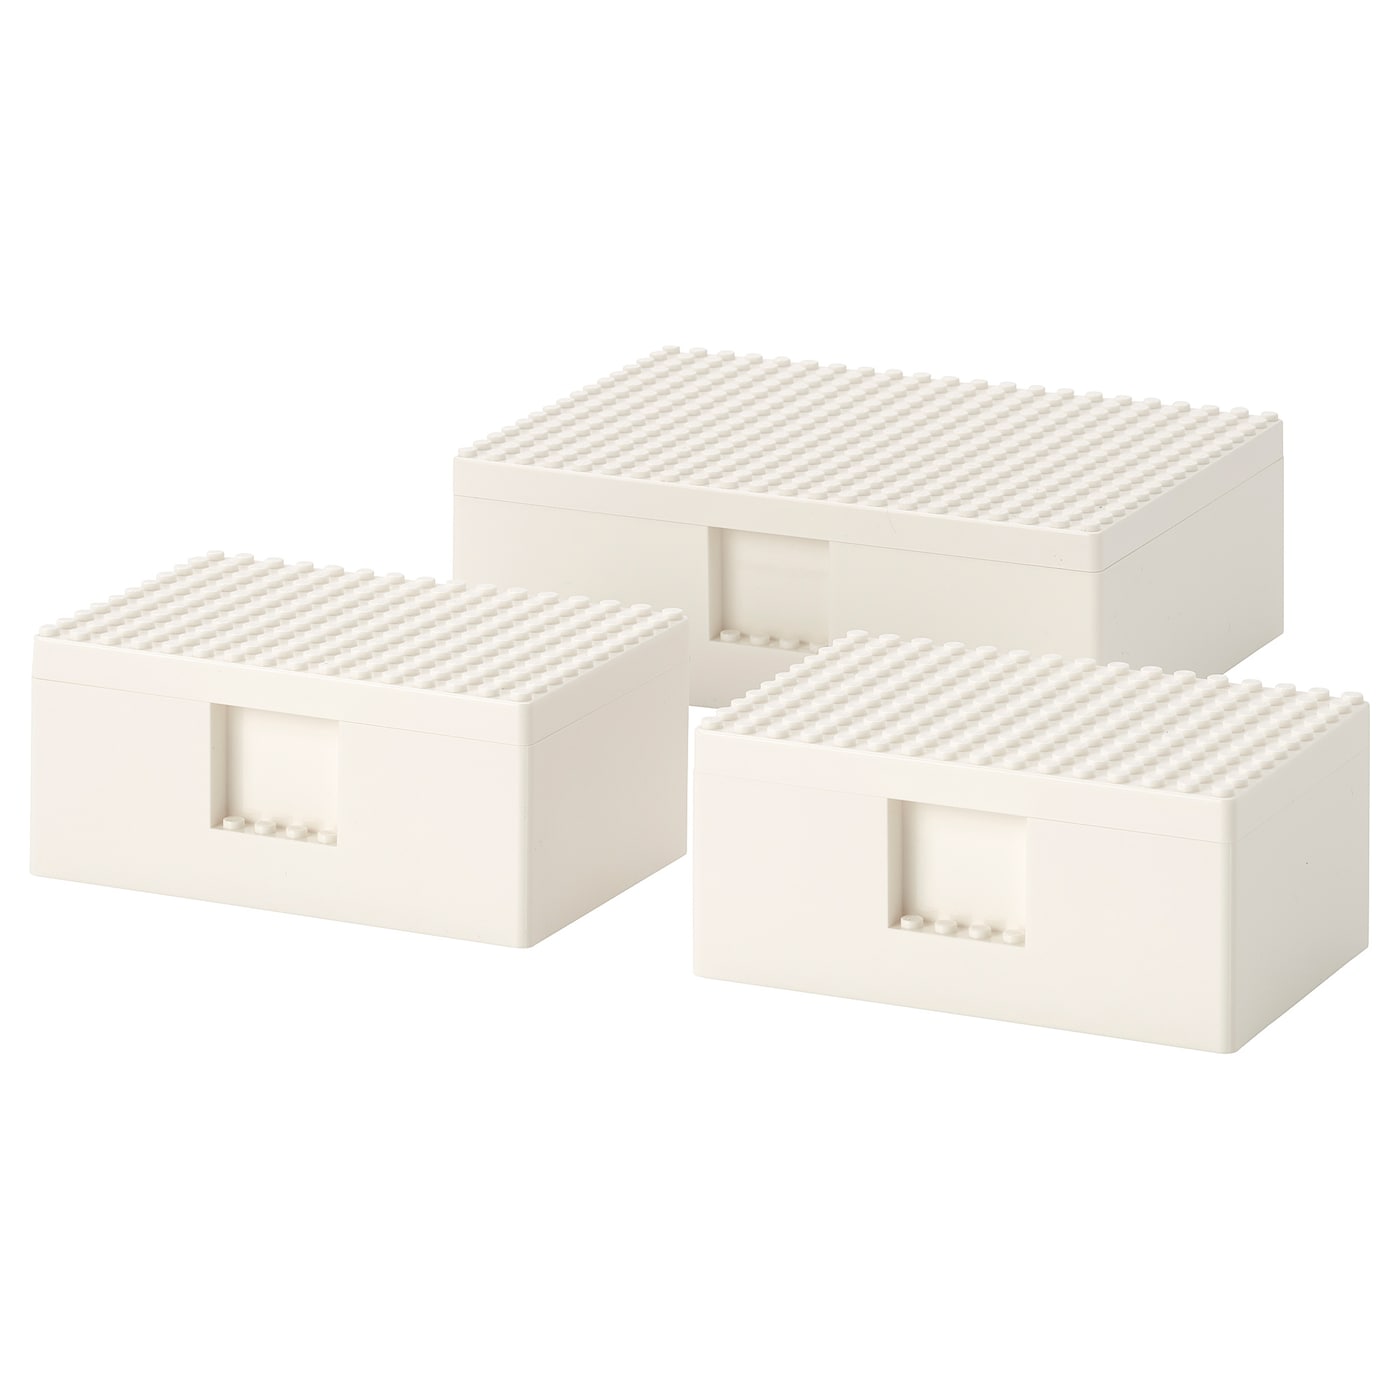 BYGGLEK LEGO коробка с крышкой, 3 шт., белая IKEA